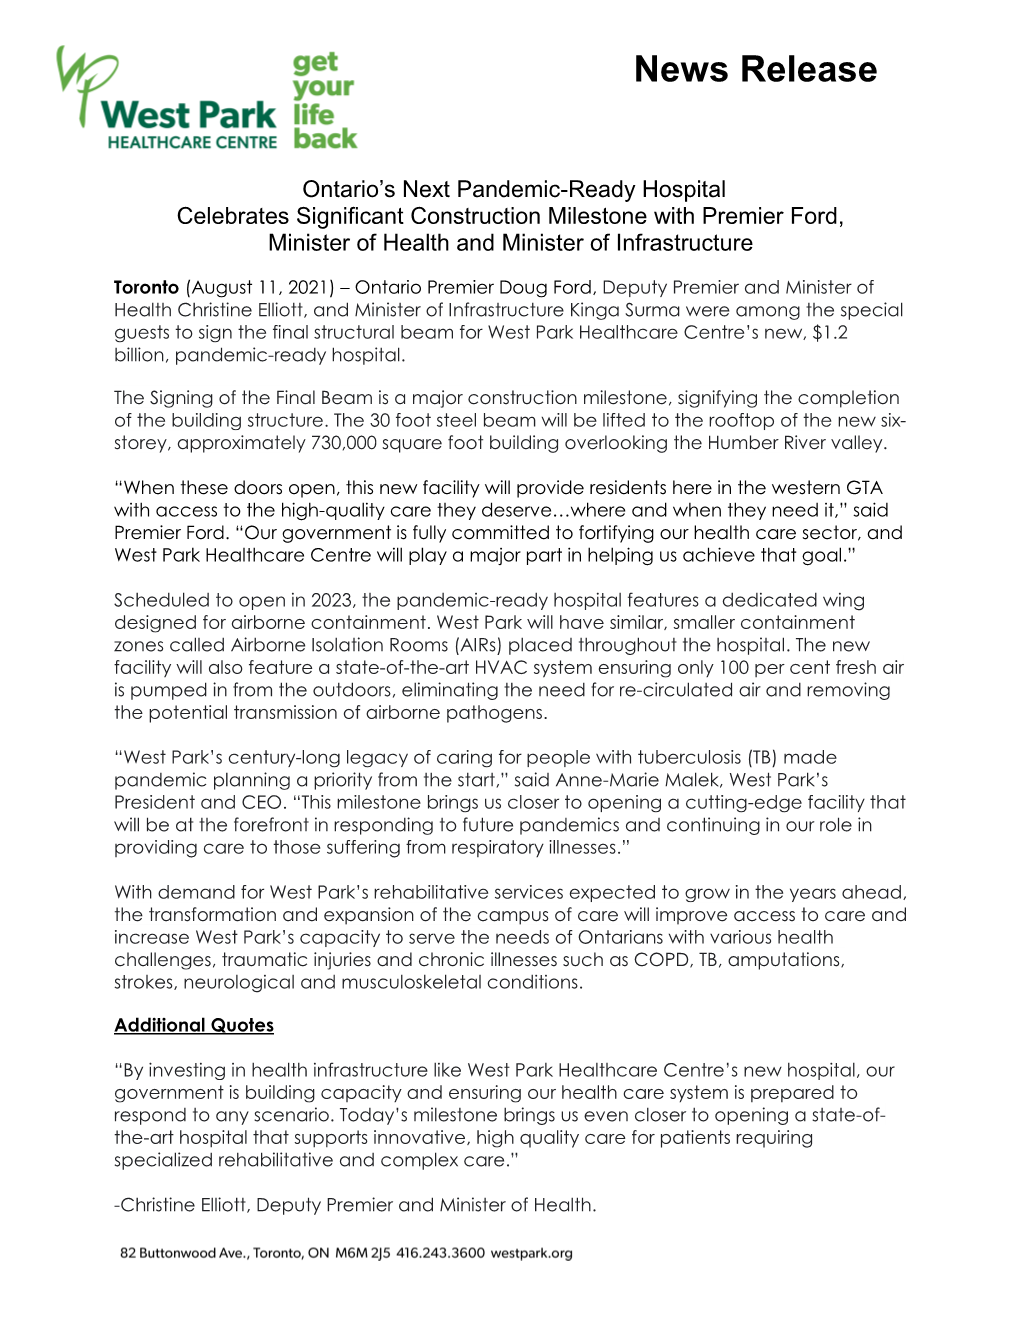 West Park Healthcare Centre’S New, $1.2 Billion, Pandemic-Ready Hospital